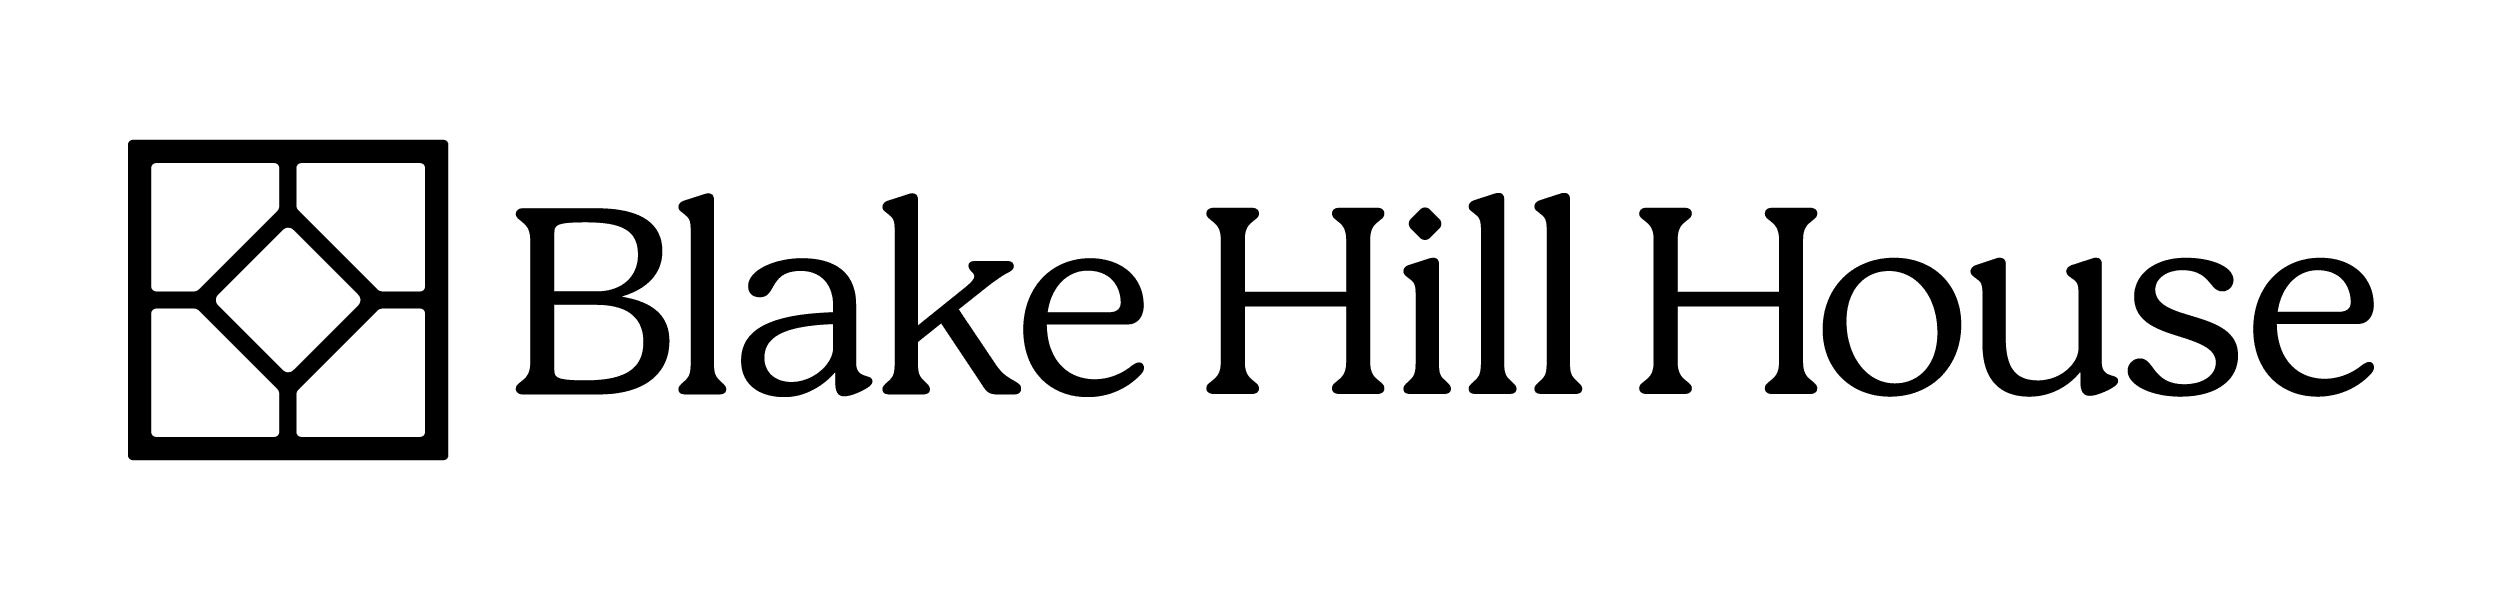 blake hill house logo